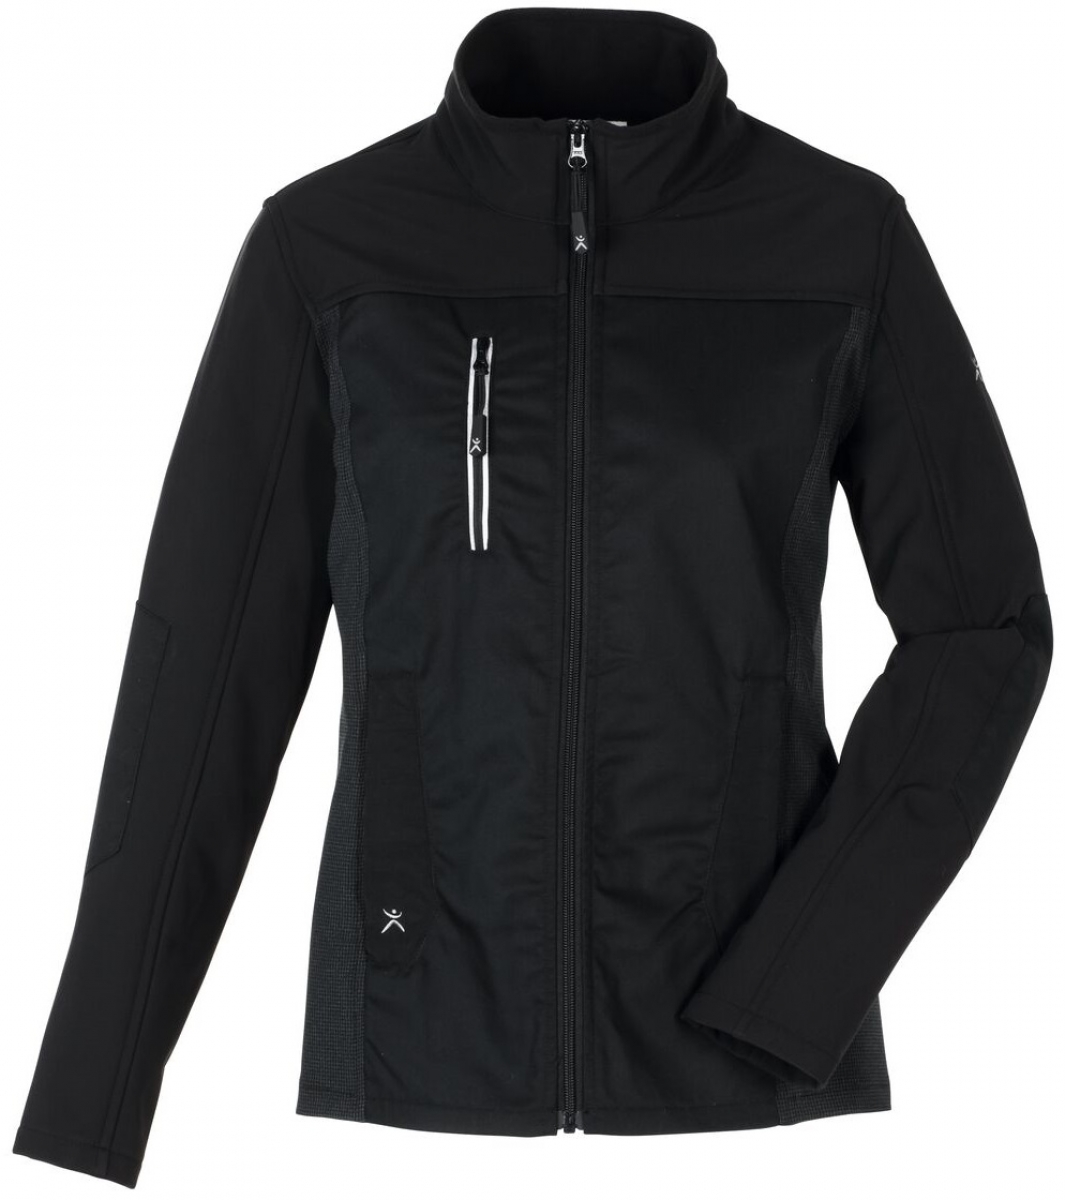 PLANAM-Workwear, Damen-Hybridjacke, Norit, 245 g/m, schwarz/schwarz